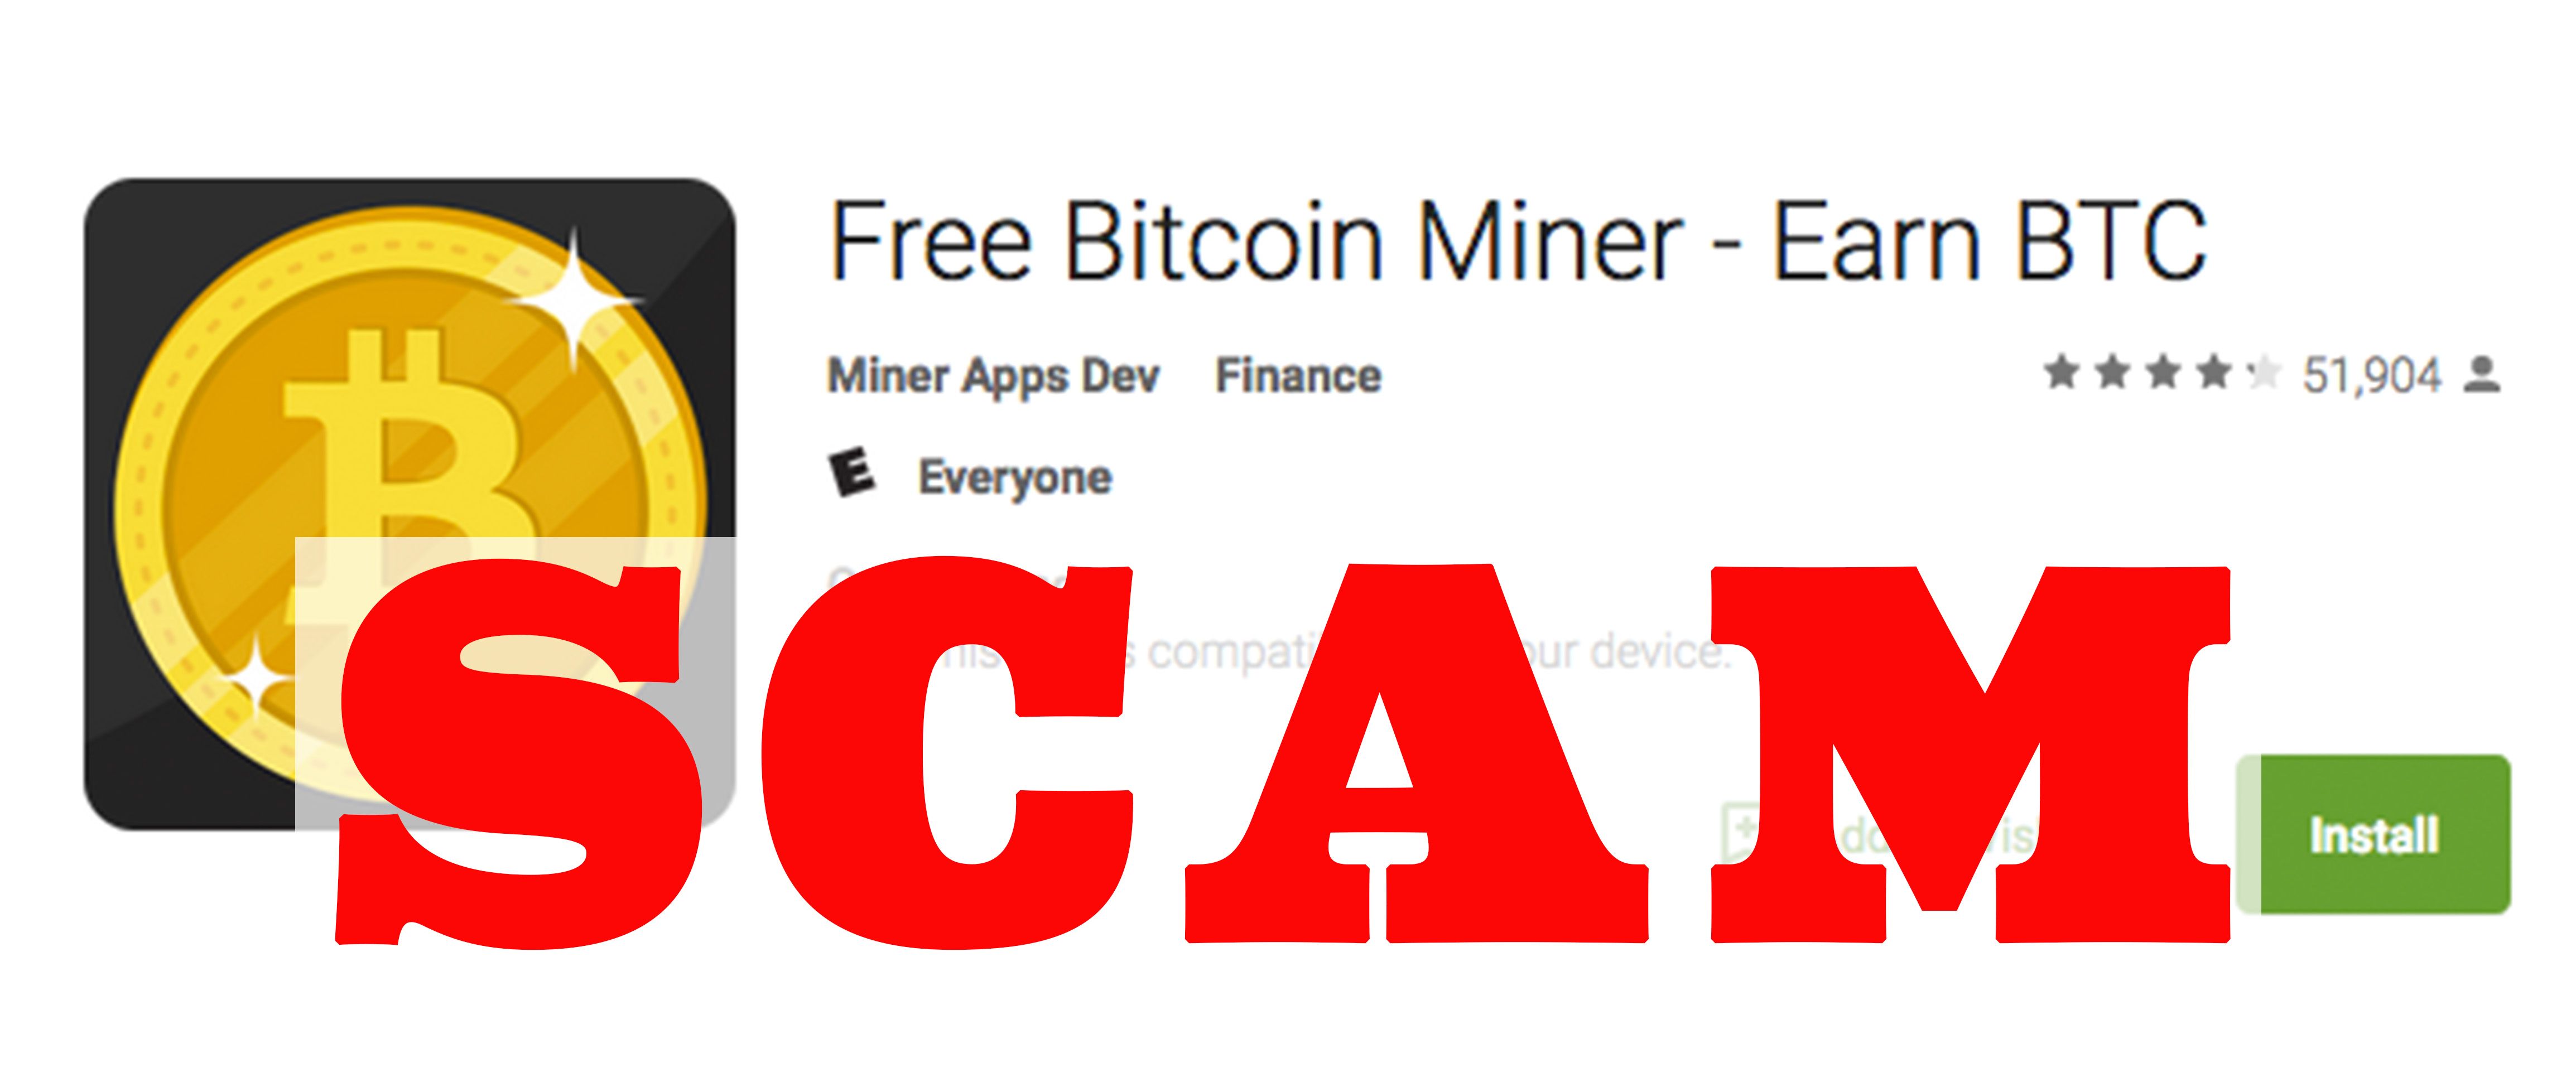 legit free bitcoin mining app